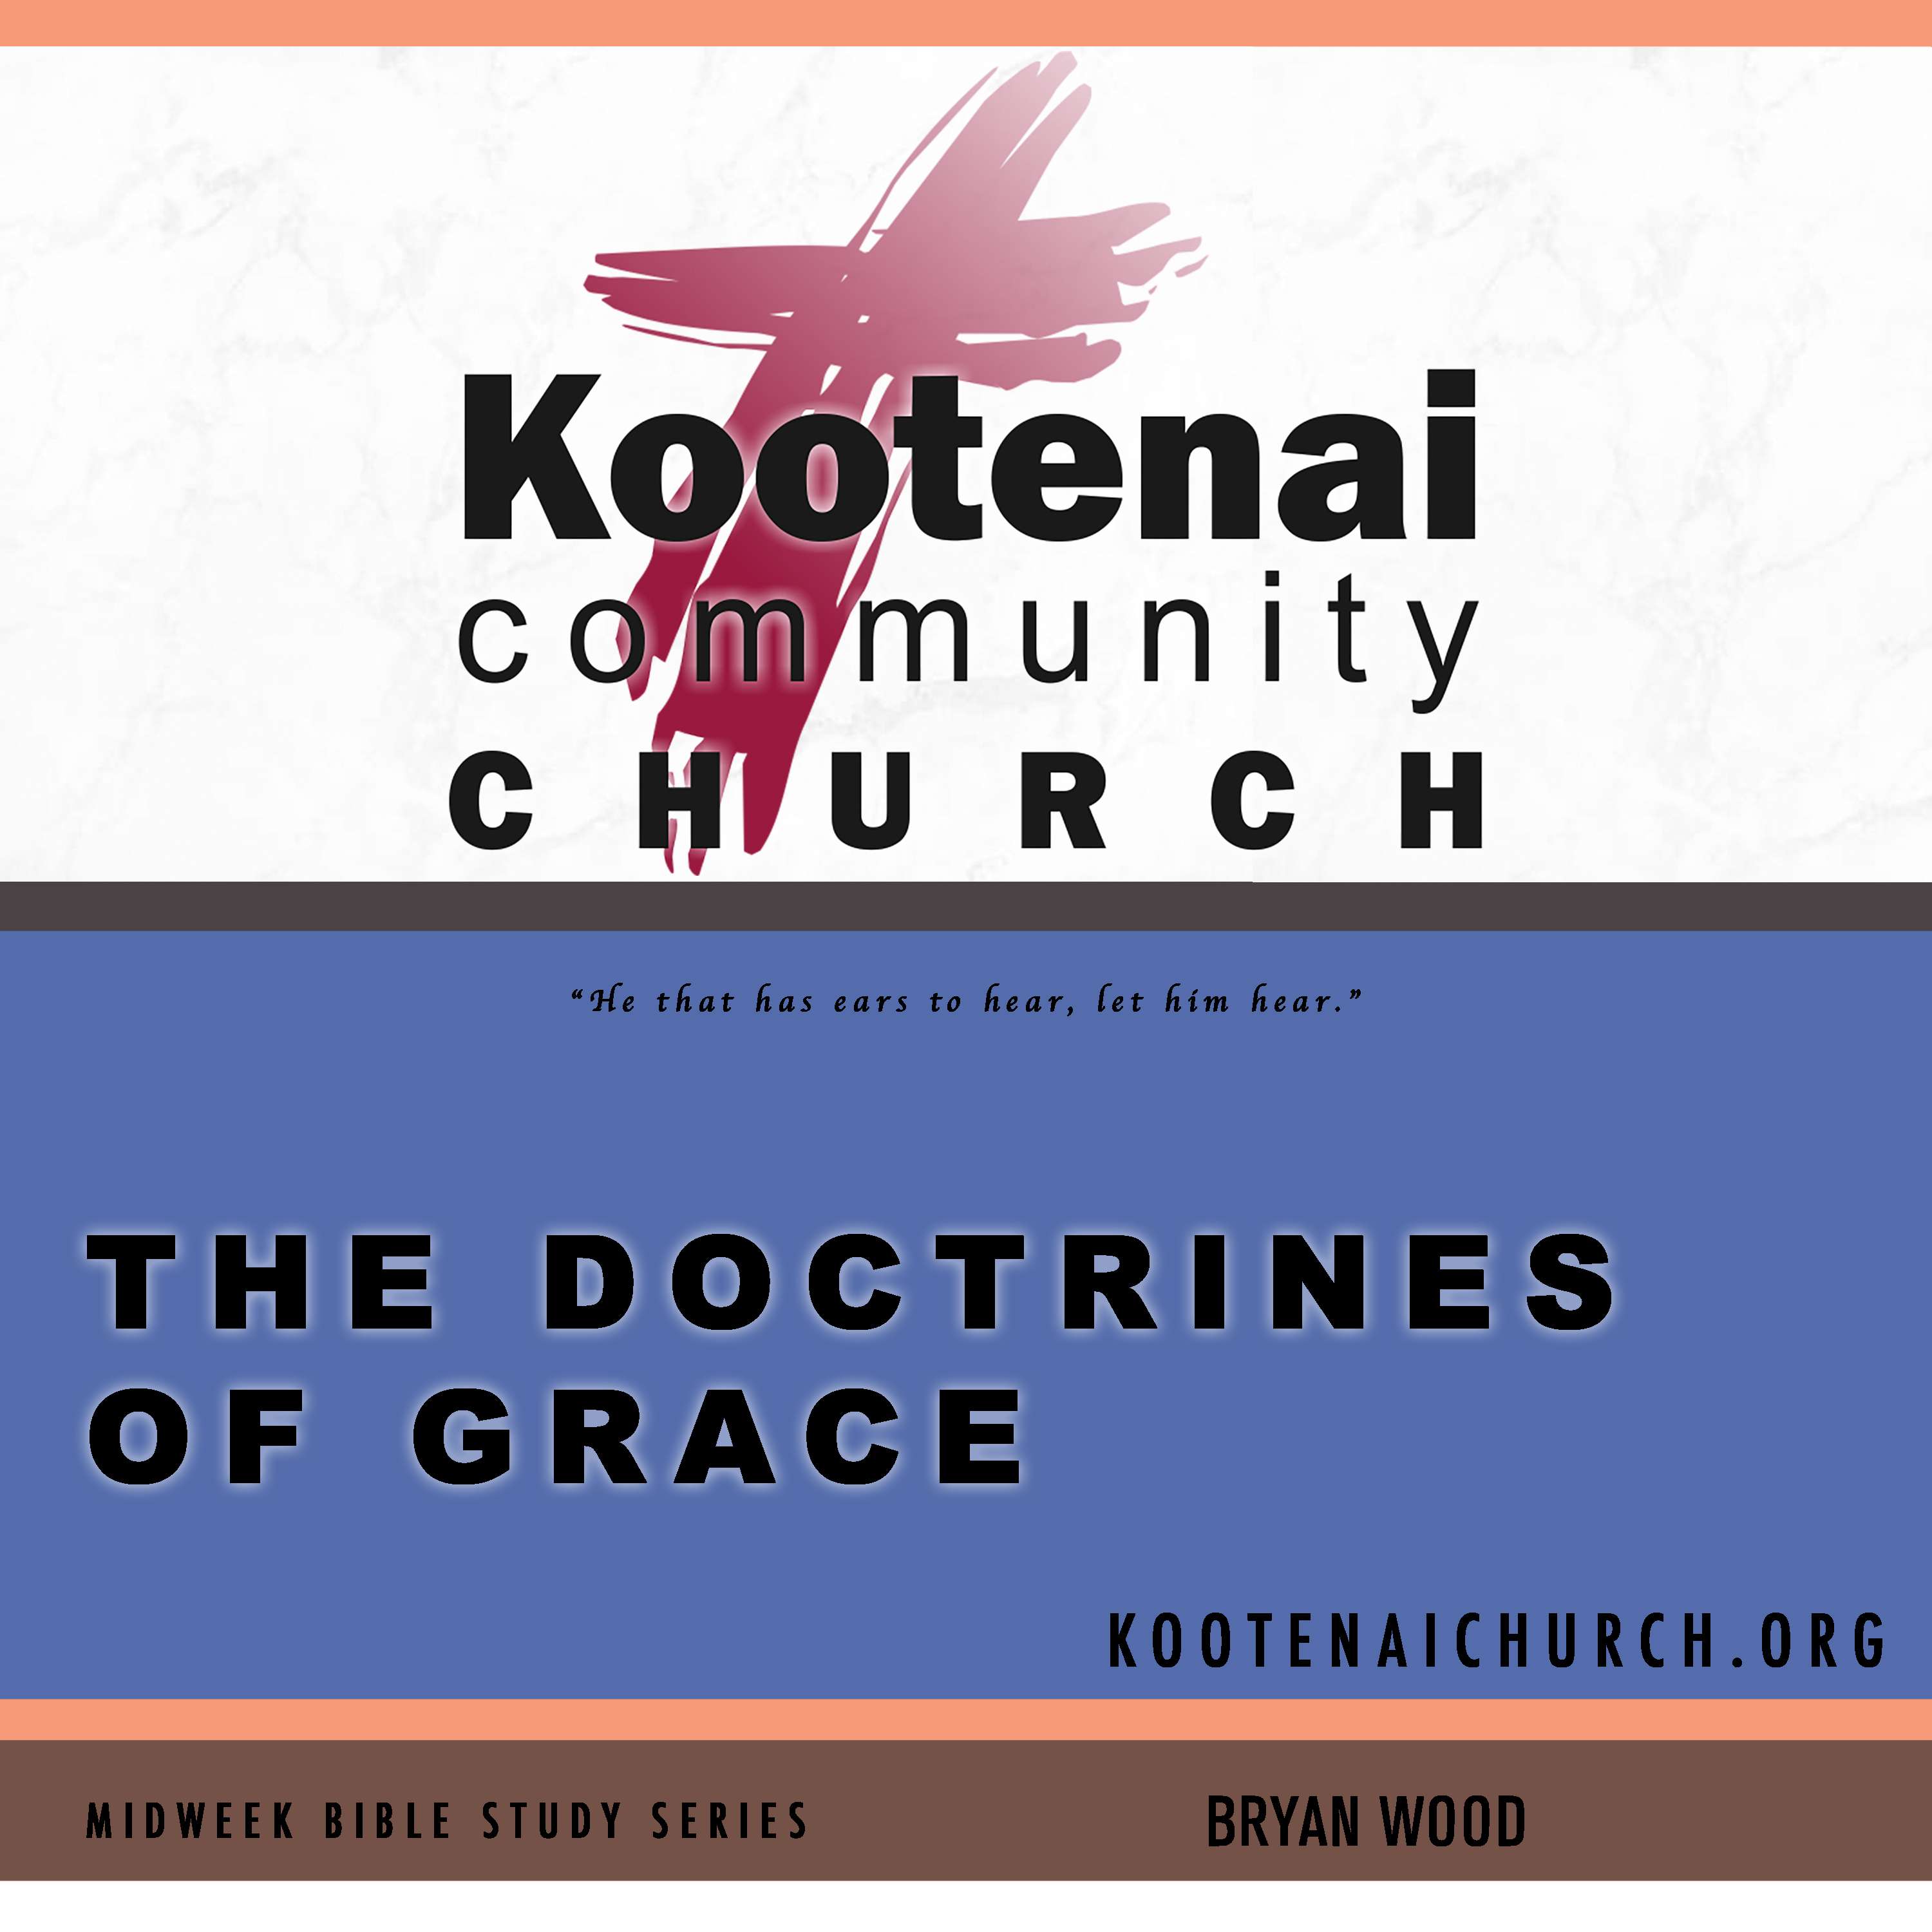 Kootenai Church Midweek Bible Study Series: The Doctrines of Grace